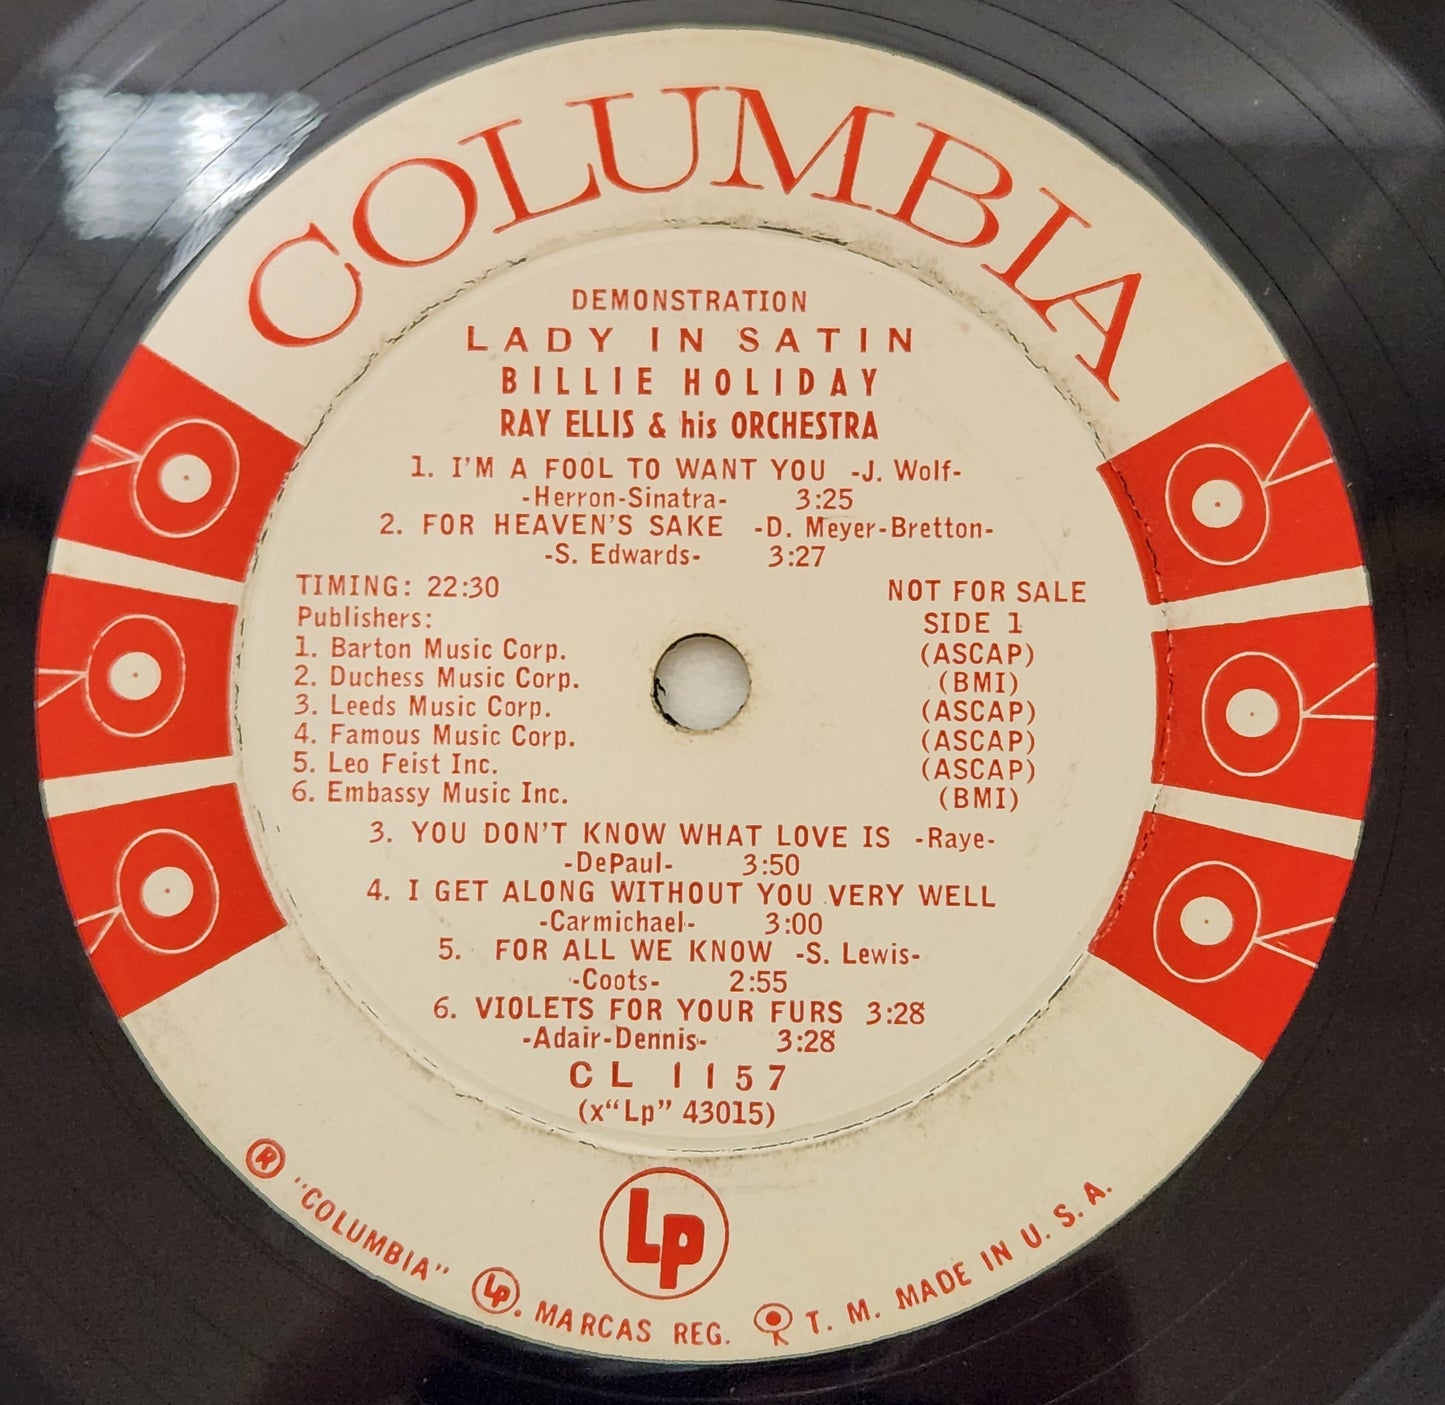 Billie Holiday "Lady In Satin" 1958 Promo Jazz Record Album